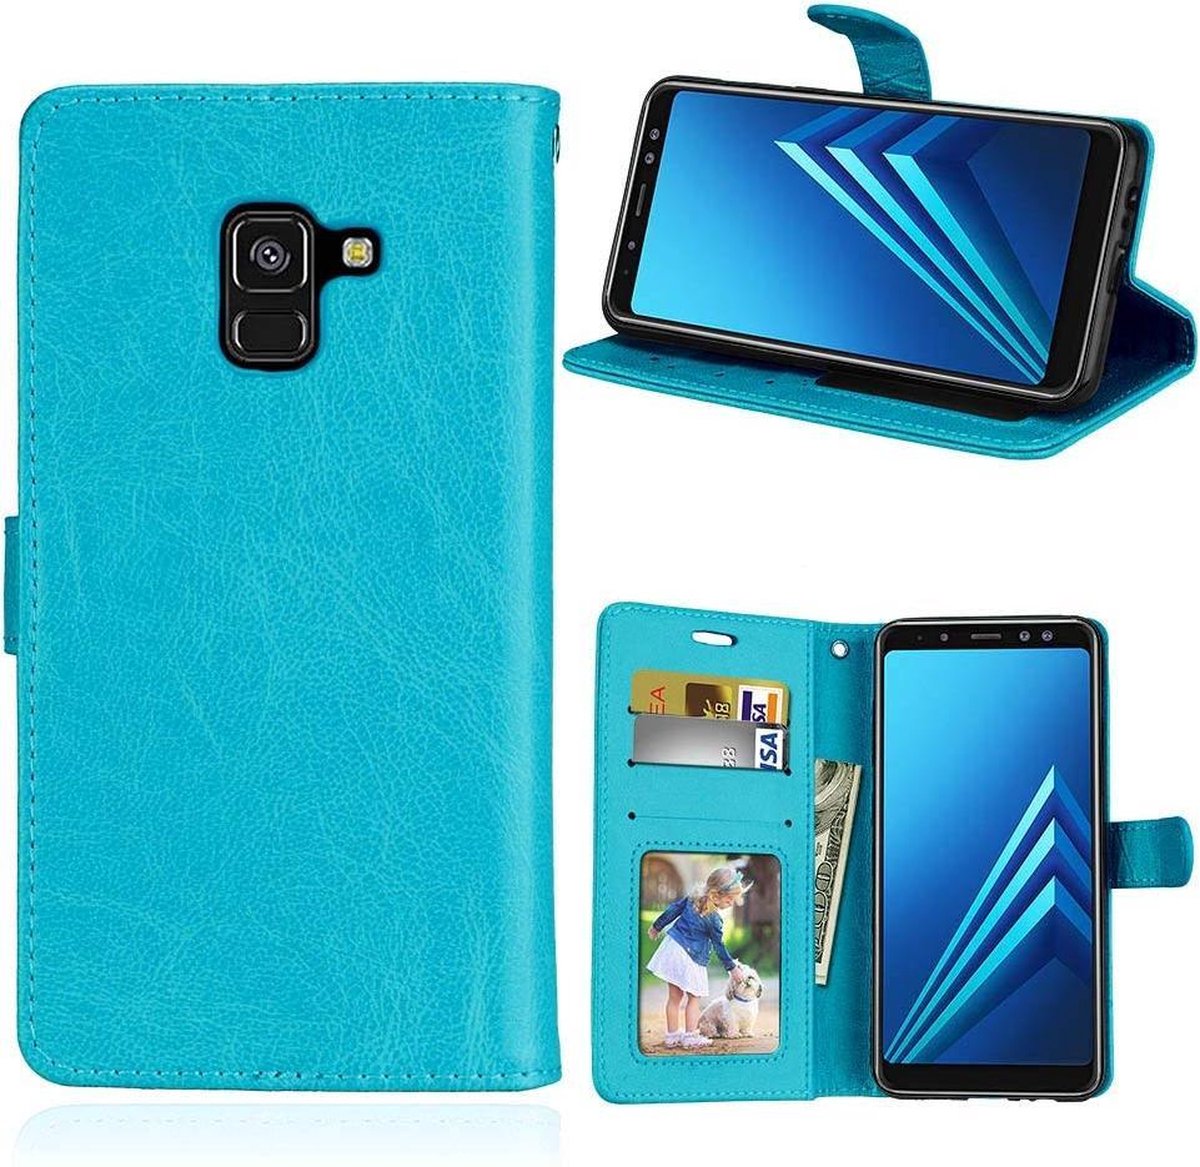 Samsung Galaxy A6 2018 portemonnee hoesje - Turquoise